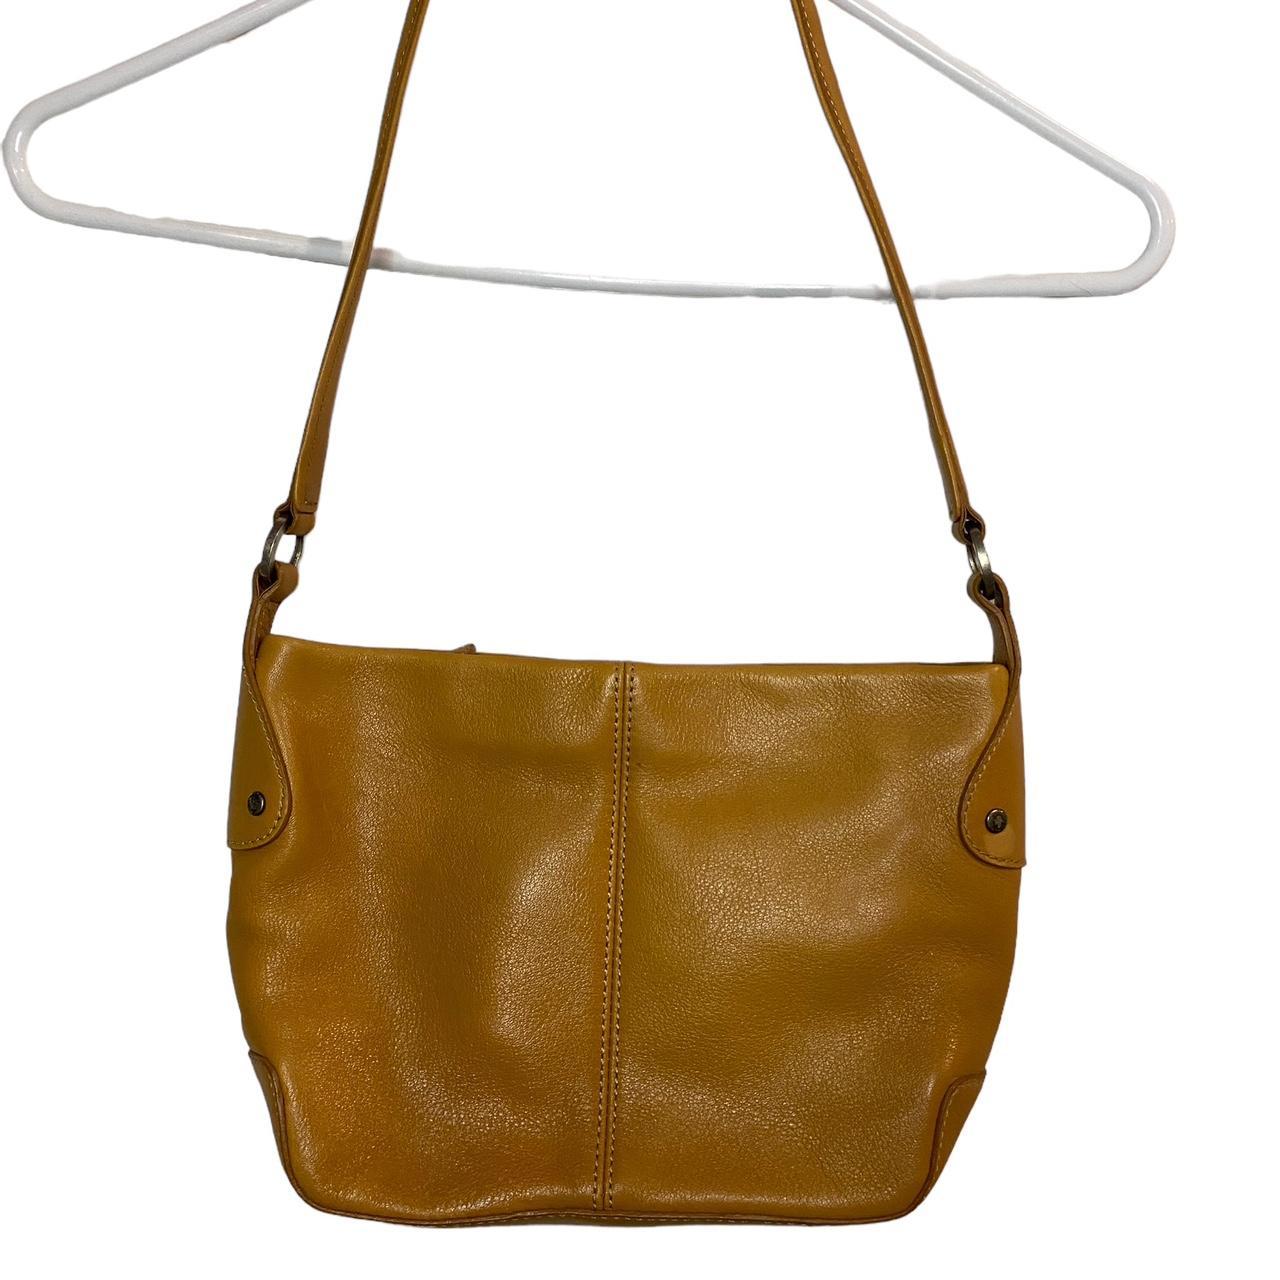 Vintage Fossil 1954 Purse #75082 Brown Leather Handbag Crossbody Bag |  Leather handbags crossbody, Brown leather handbags, Handbag